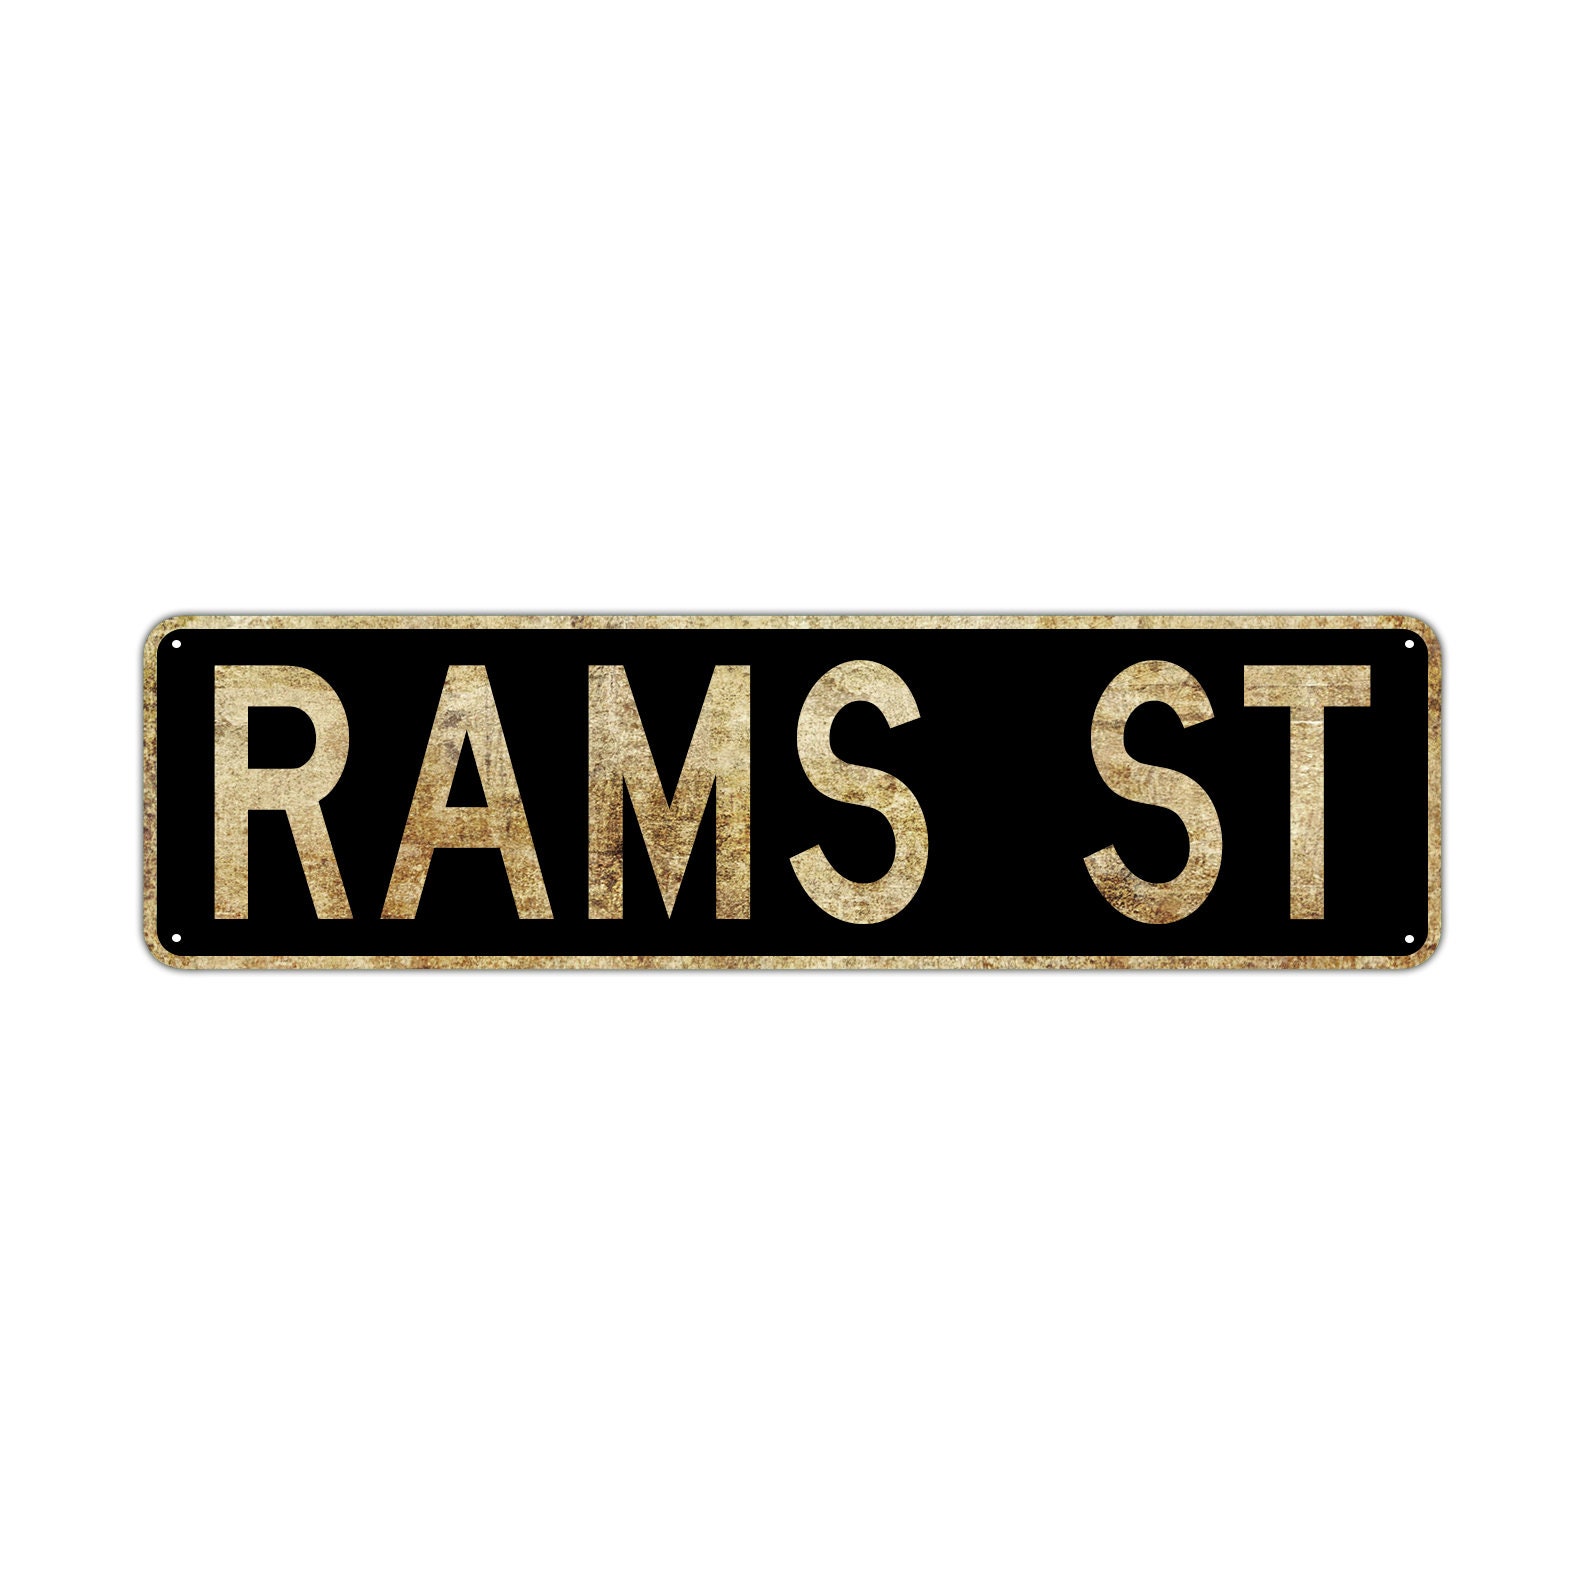 Rams St Street Sign Rustic Vintage Retro Metal Decor Wall Shop Man Cave Bar